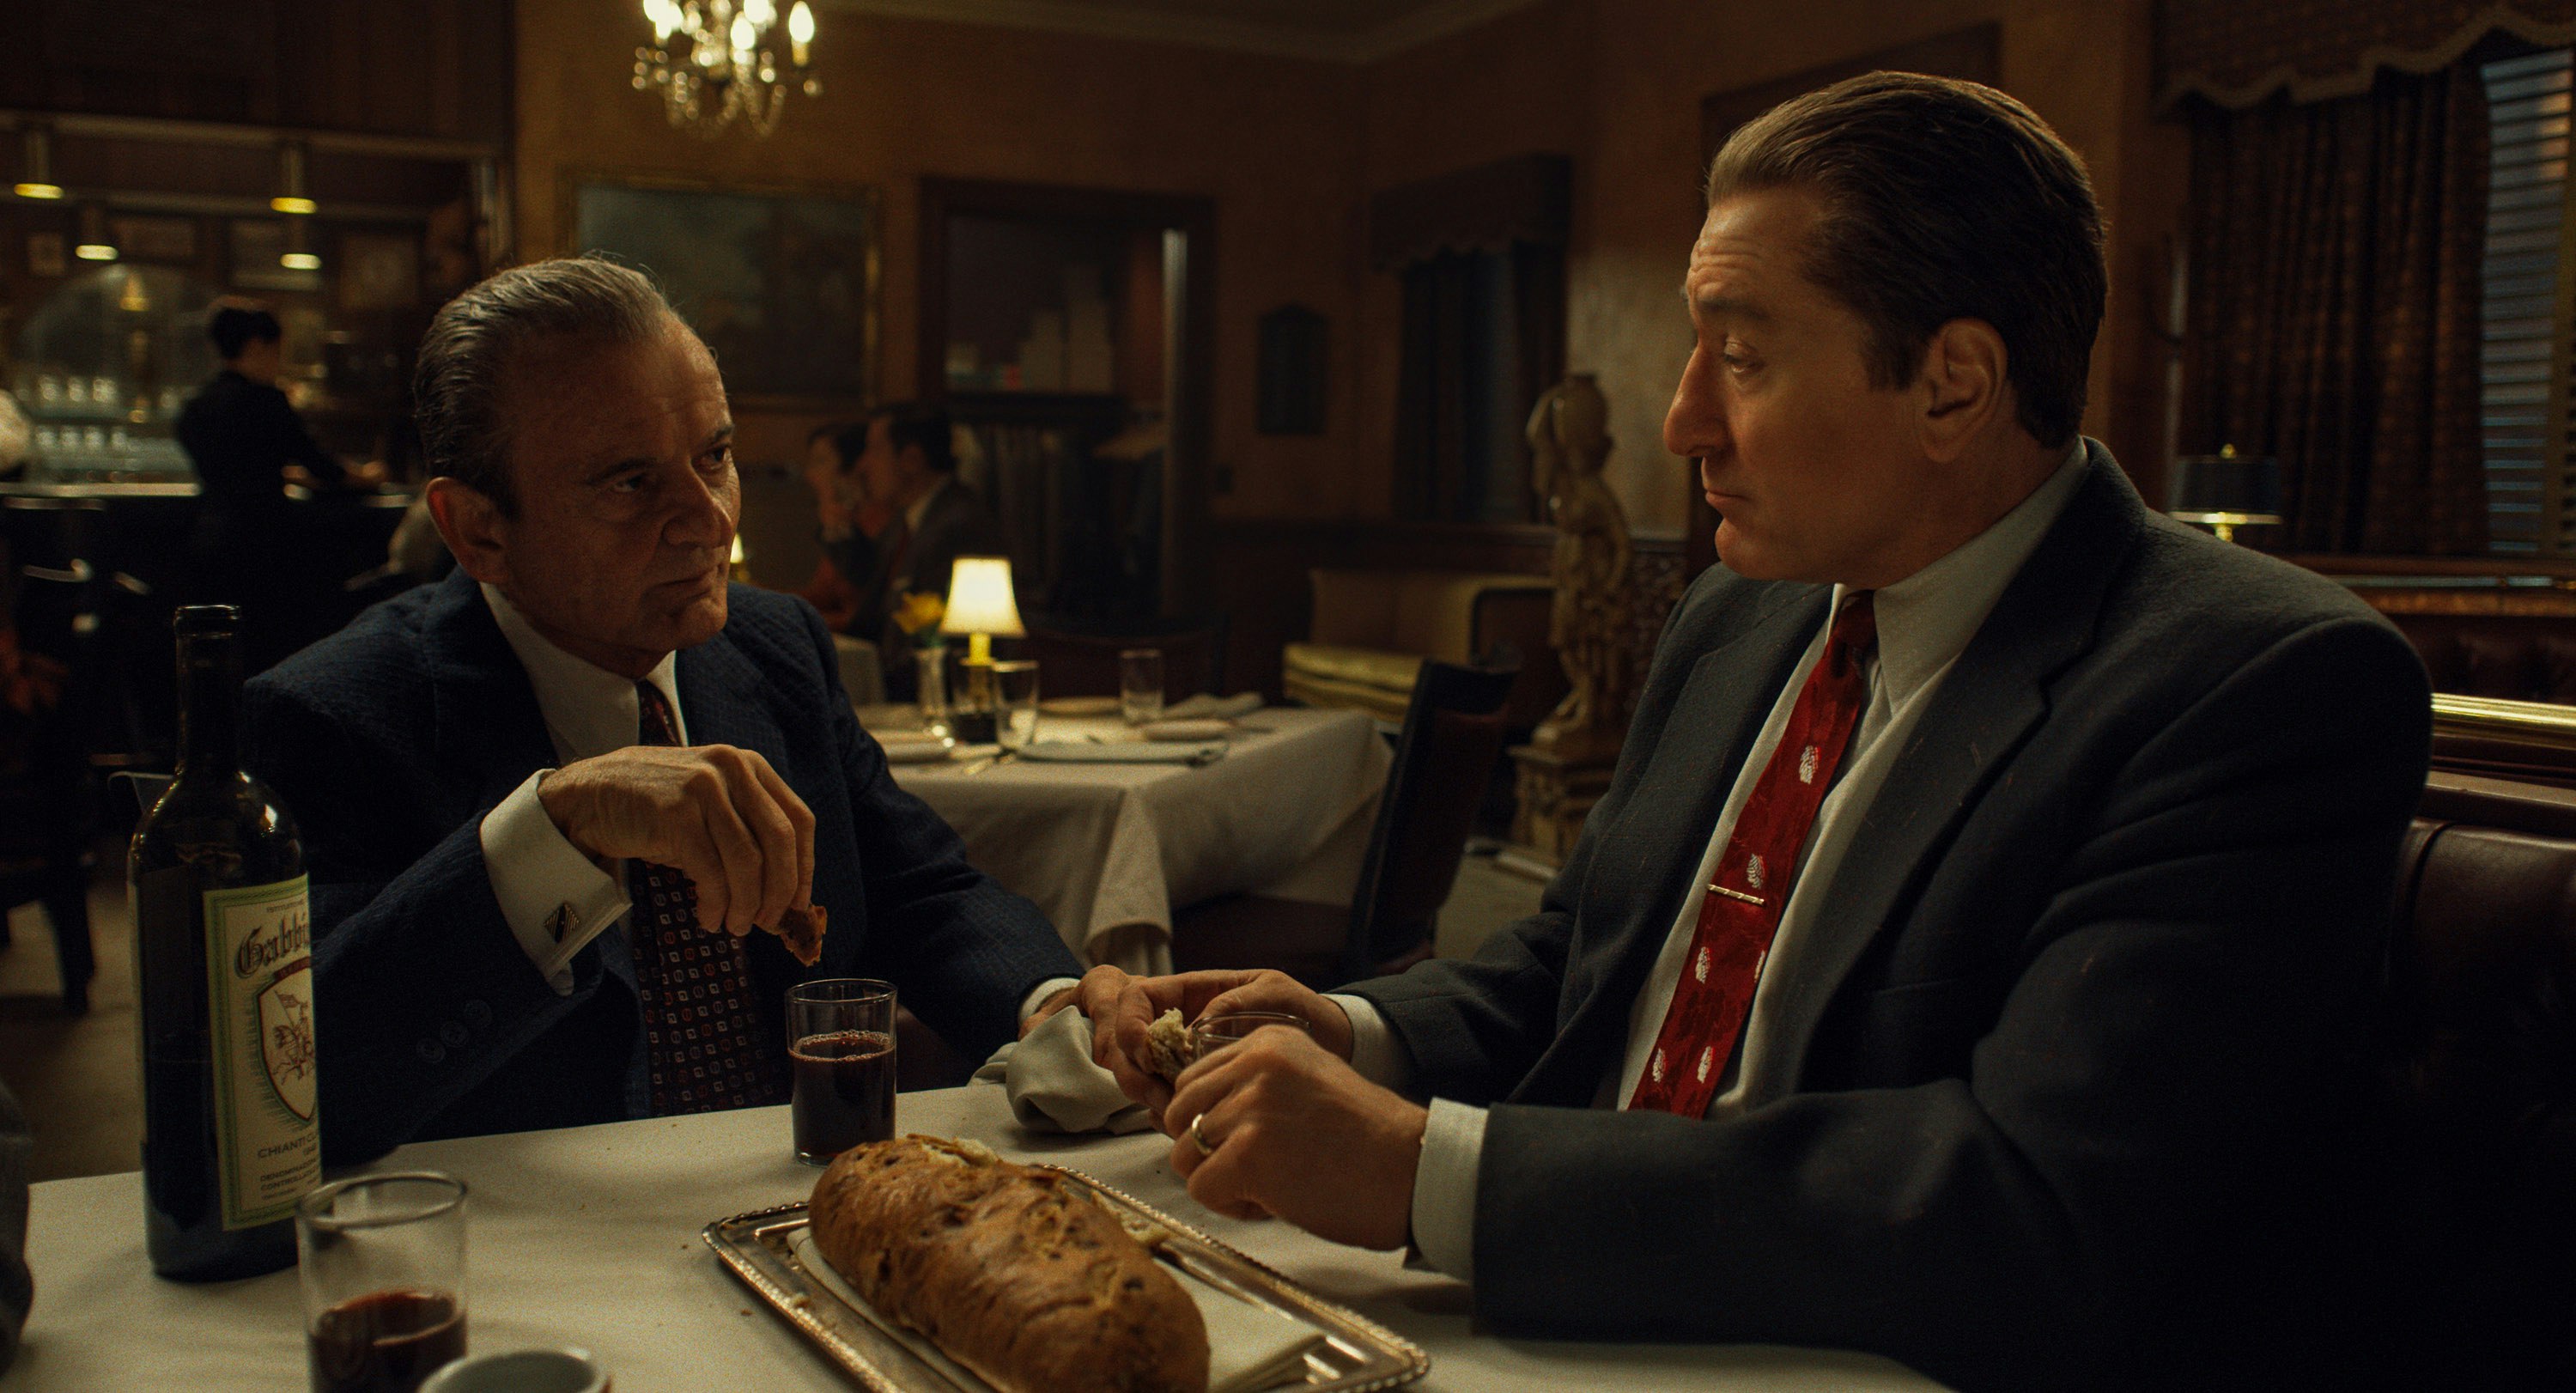 Actors Joe Pesci and Robert De Niro are sitting having dinner in a dimly-lit restaurant in a scene from 'The Irishman'.